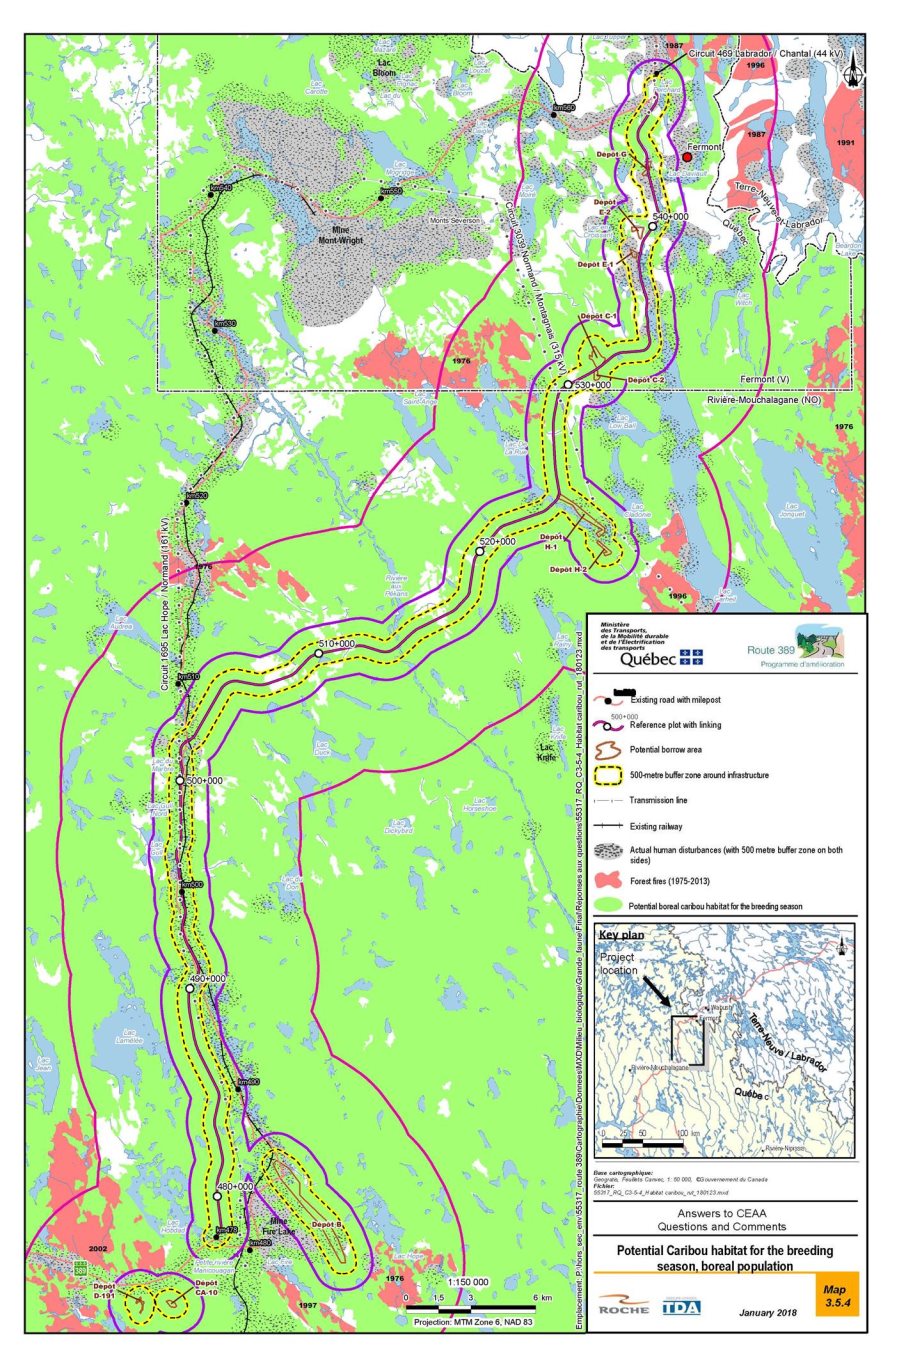 Figure 15: Potential Boreal Caribou habitat for the rutting (breeding) season